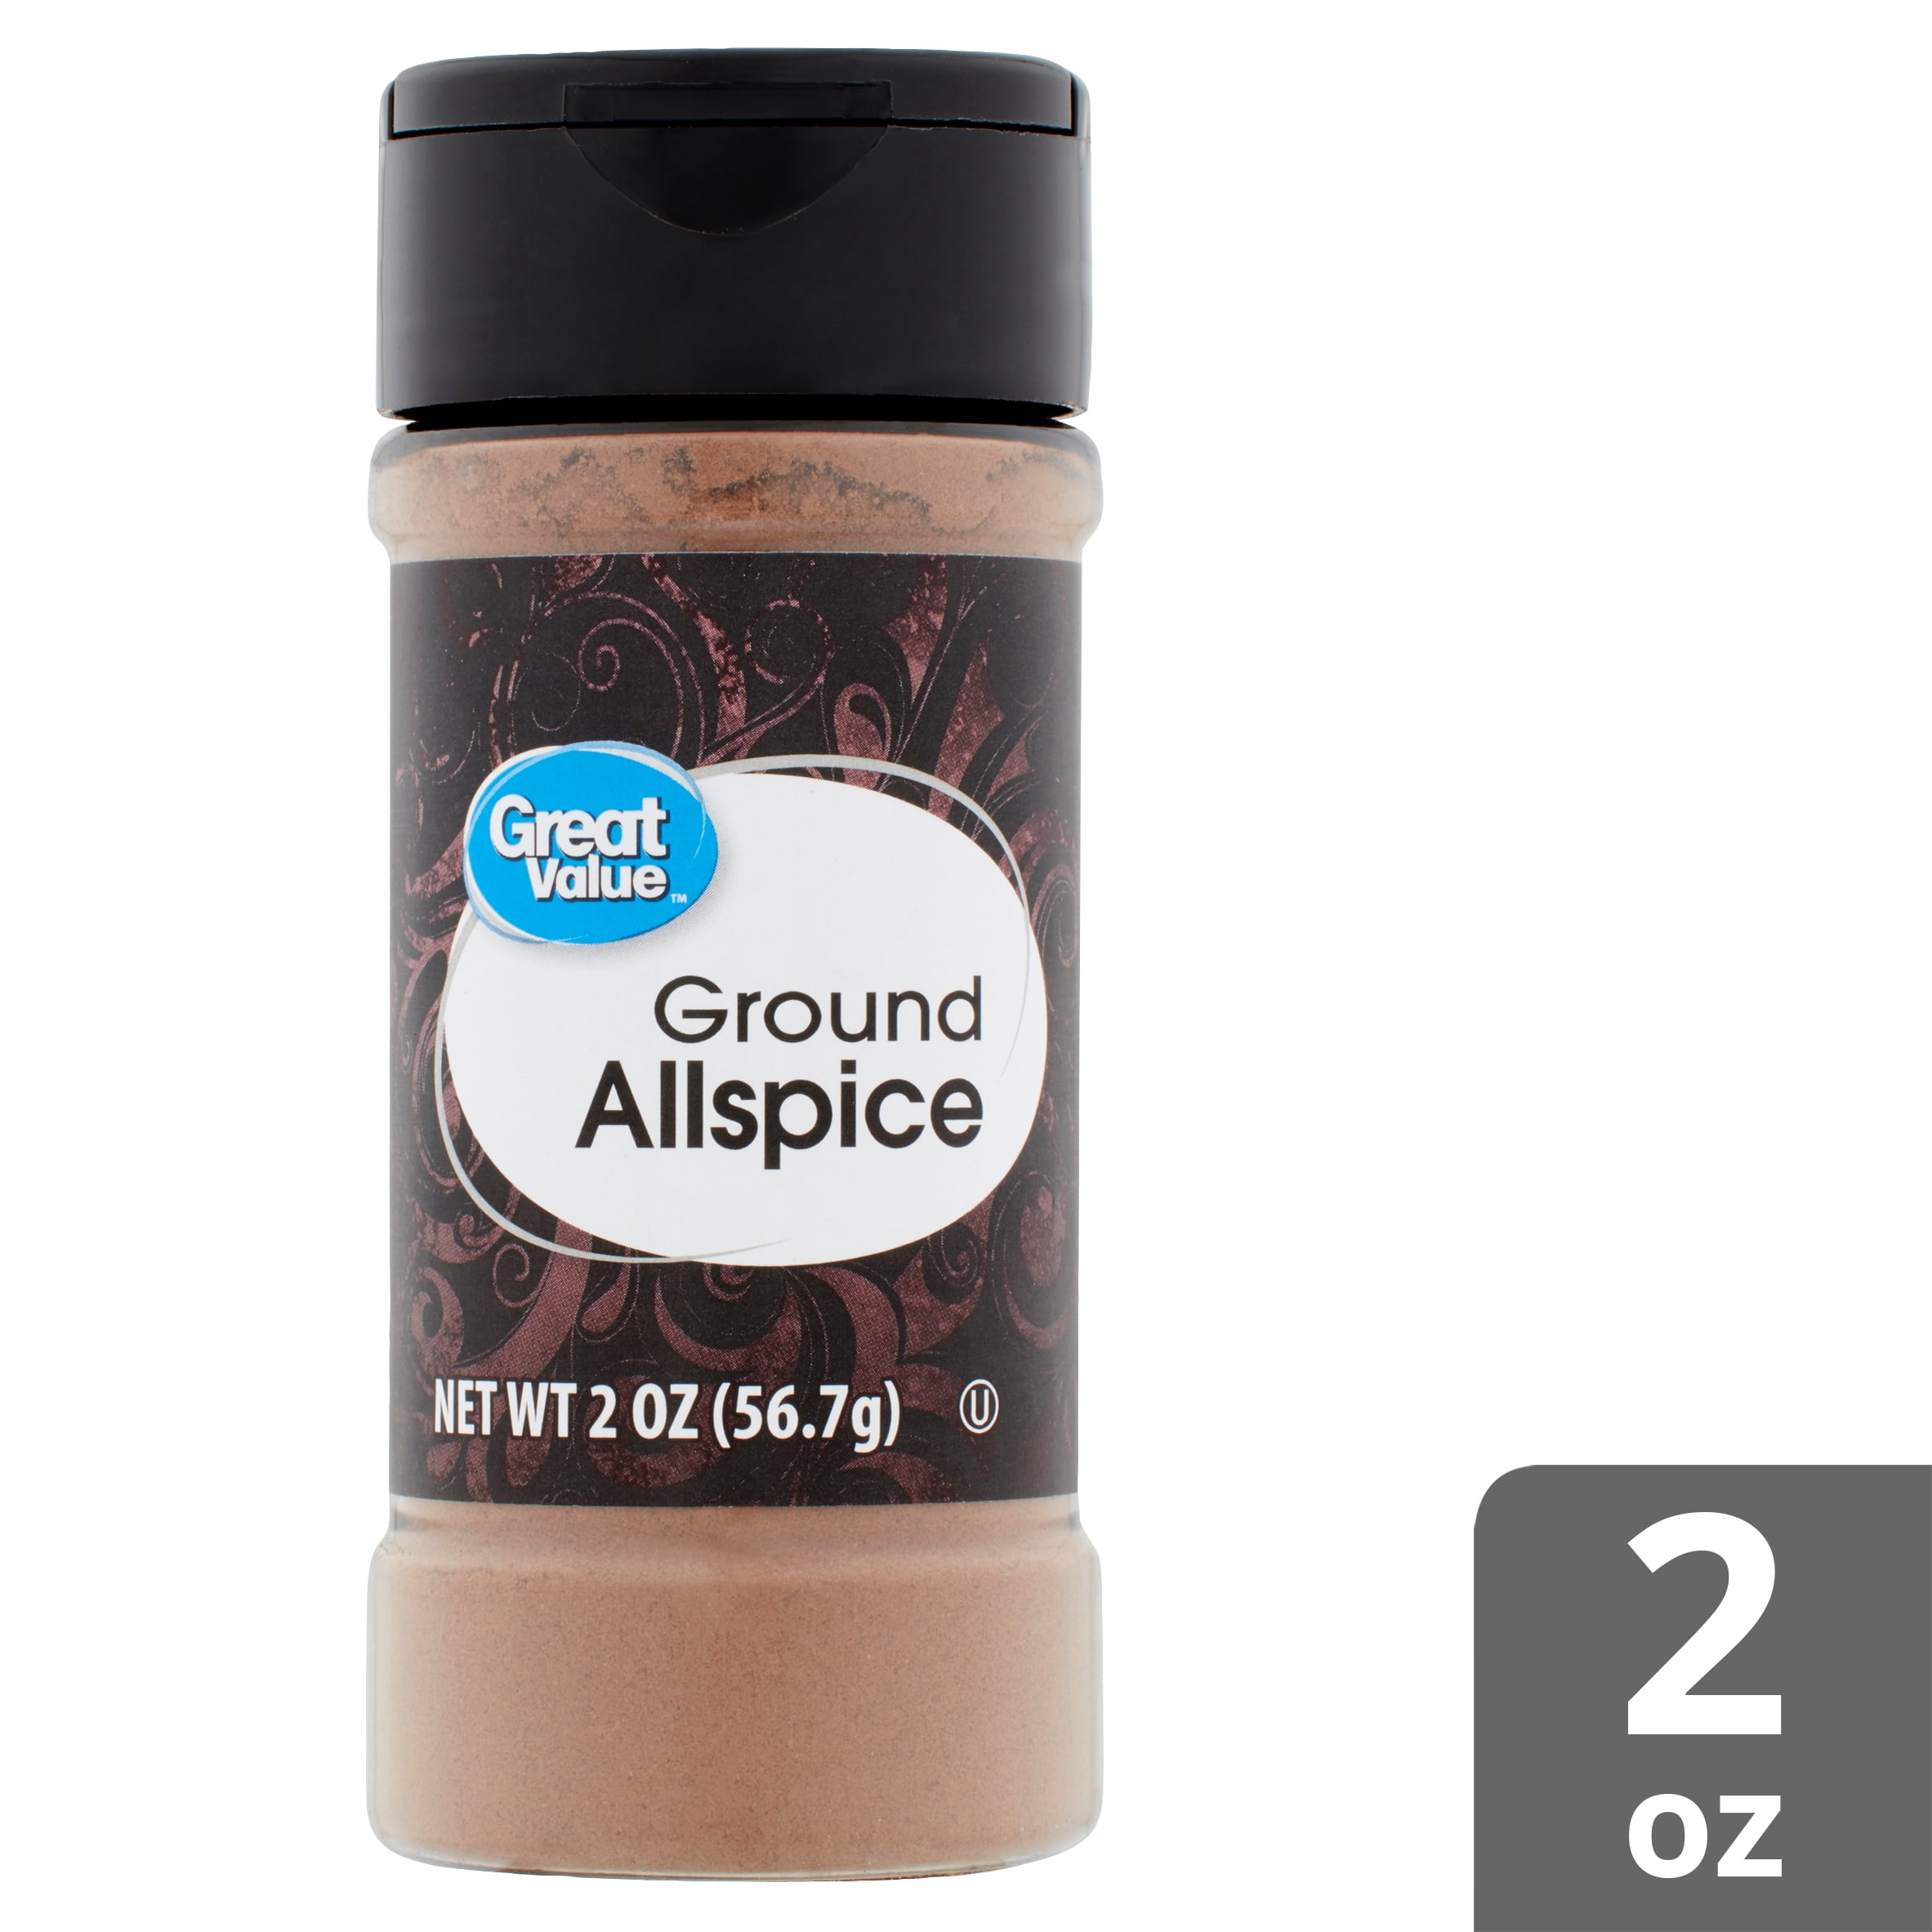 Regal Ground Allspice, Seasoning, Spice, Rub (select size below)